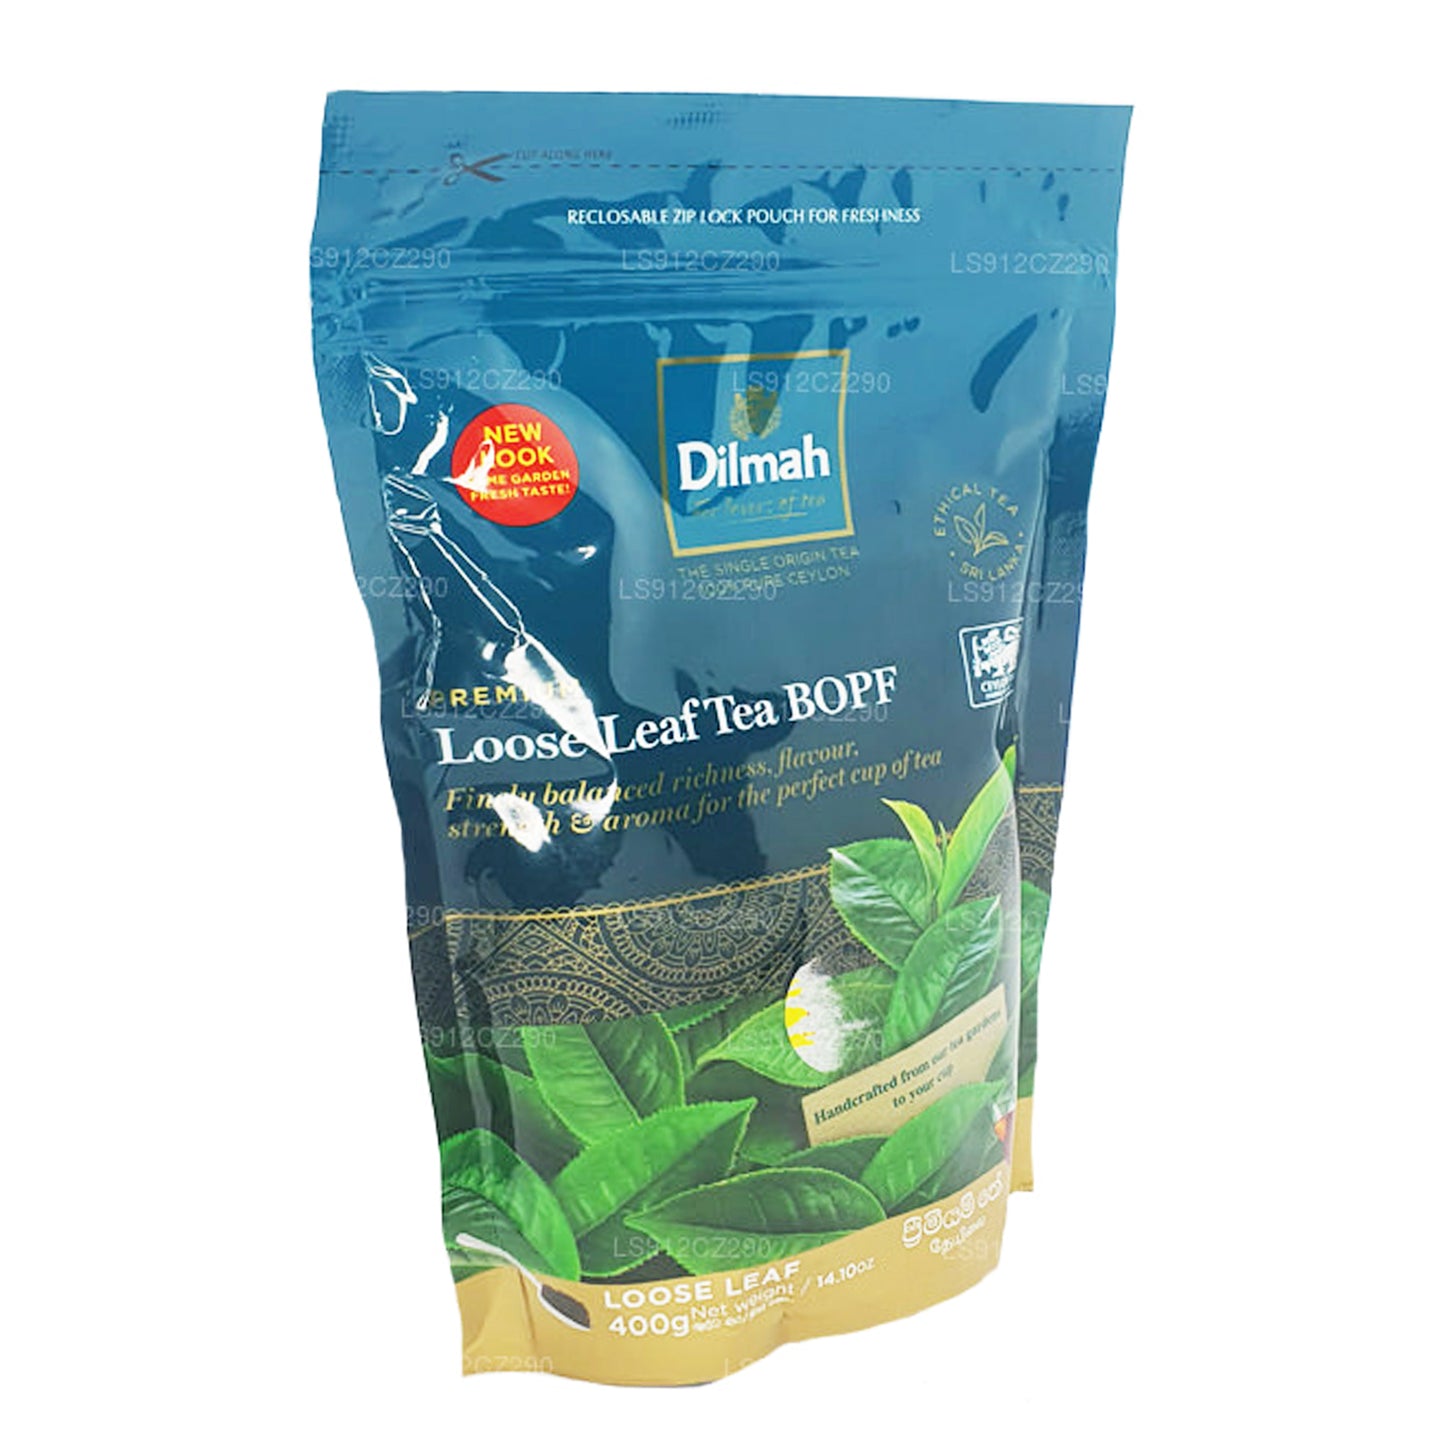 Dilmah Premium Ceylon løs blad sort te BOPF (400 g)